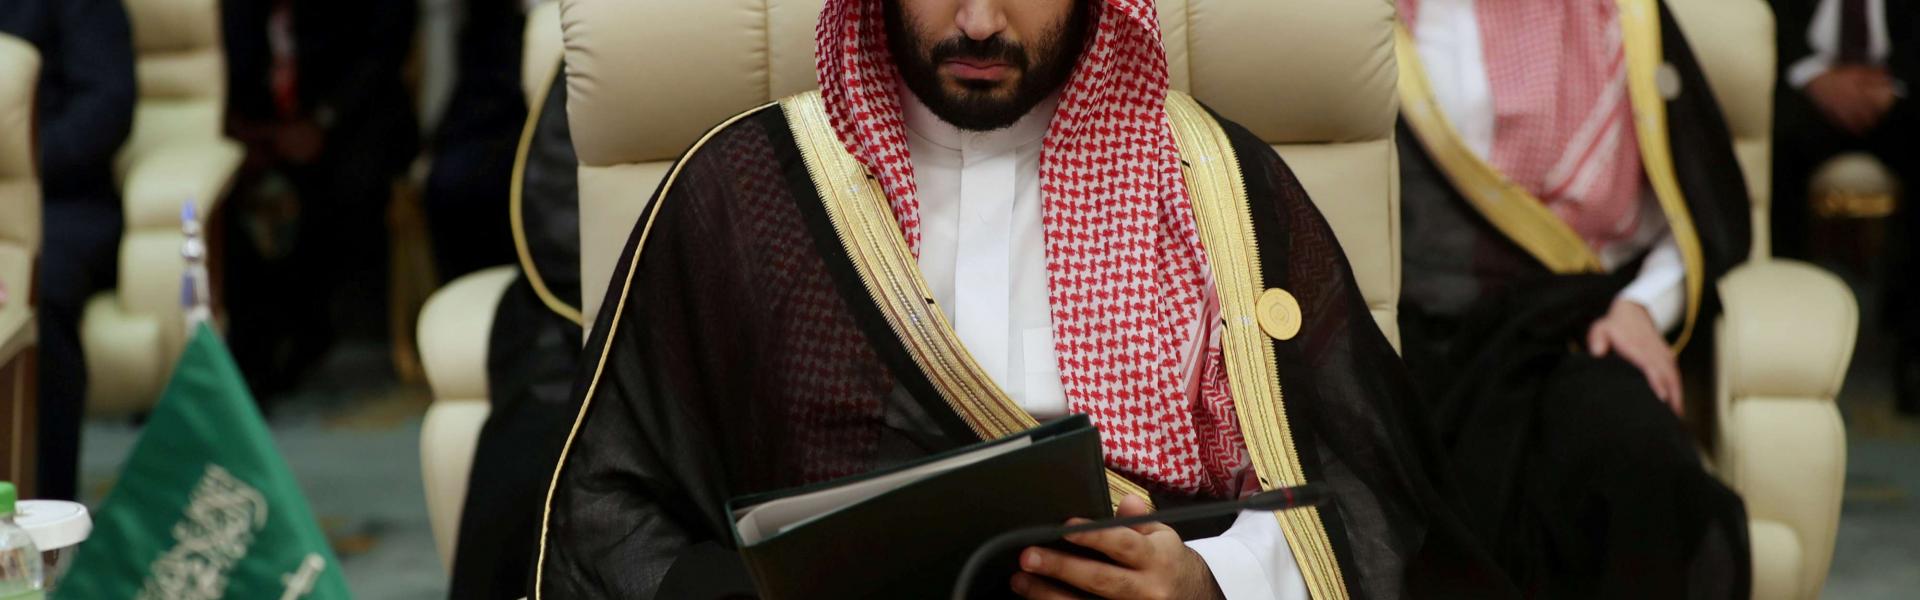 'Credible evidence' linking Saudi crown prince to Khashoggi murder - UN report